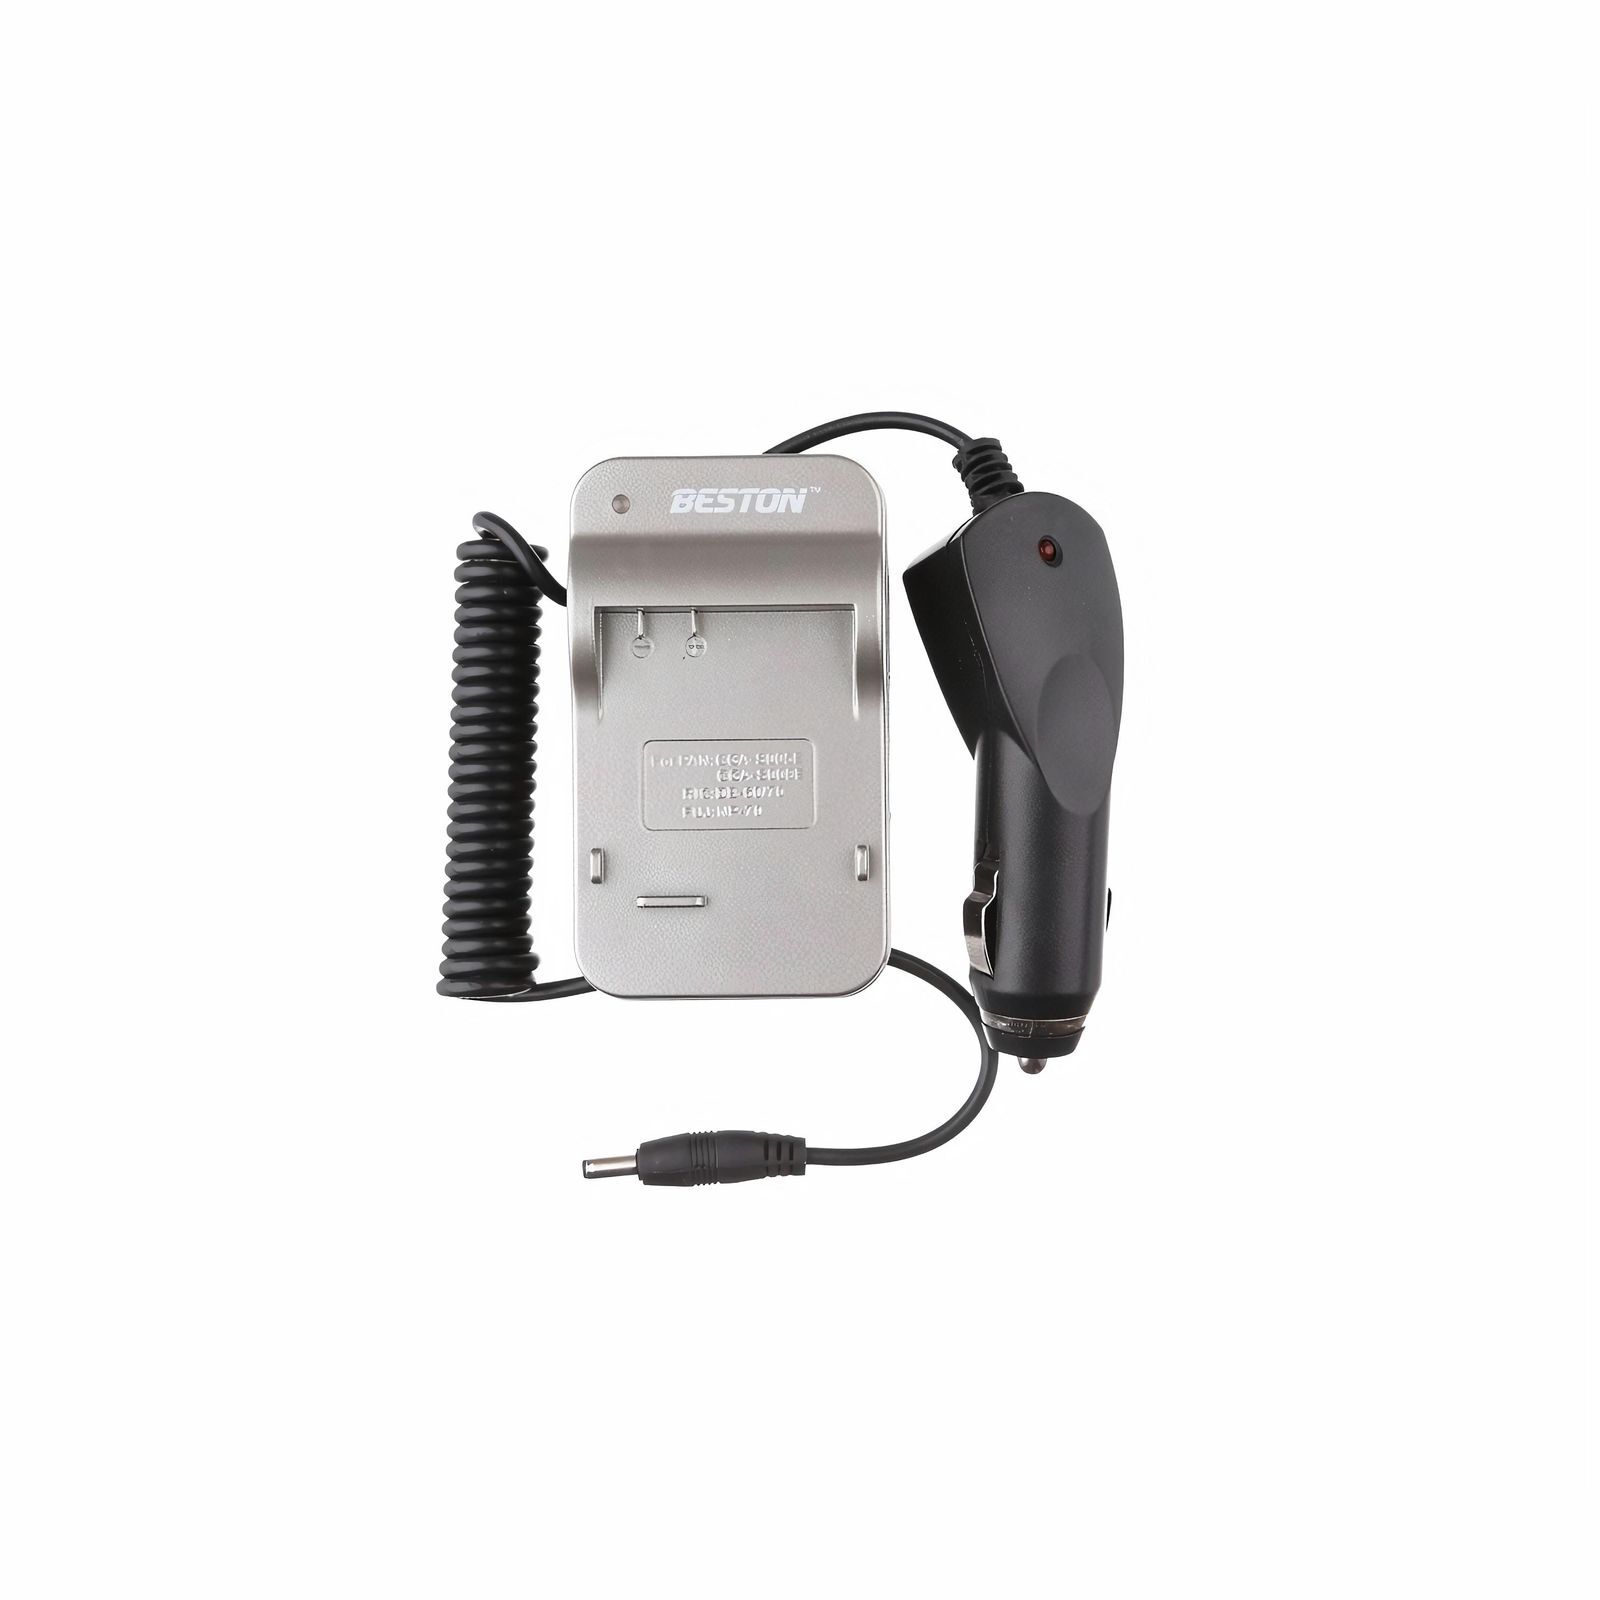 Зарядное устройство для фотоаппарата Fuji NP-70/CGA-S005E/CGA-S008E/BD-60/BD-70